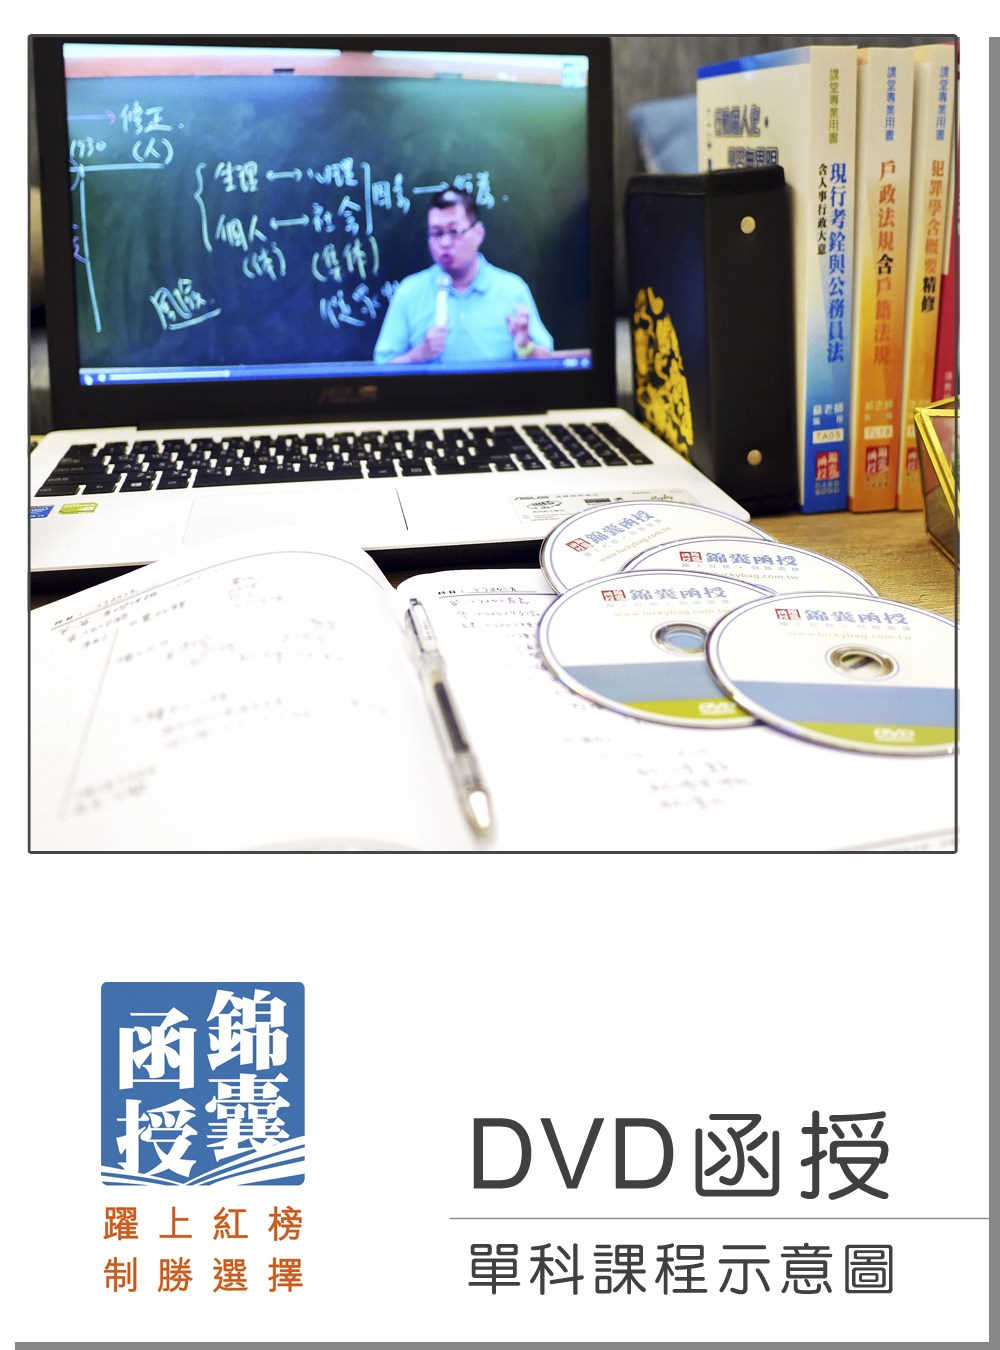 【DVD函授】稅務法規(含申論題庫班)-單科課程(109版)